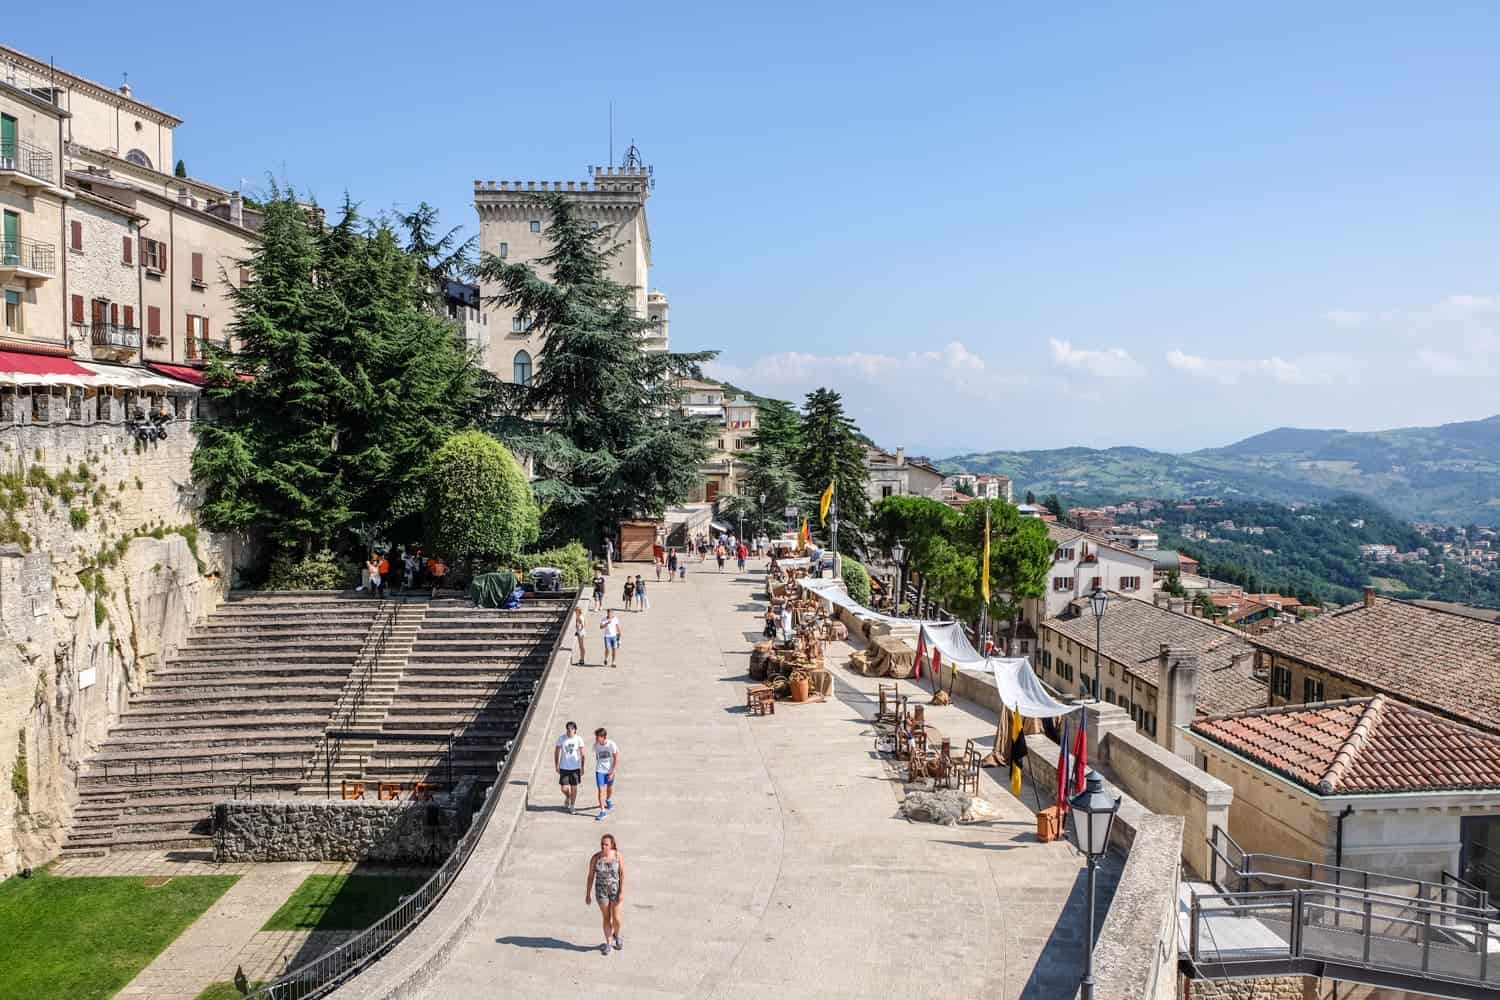 edieval Festival in San Marino, Medieval Days